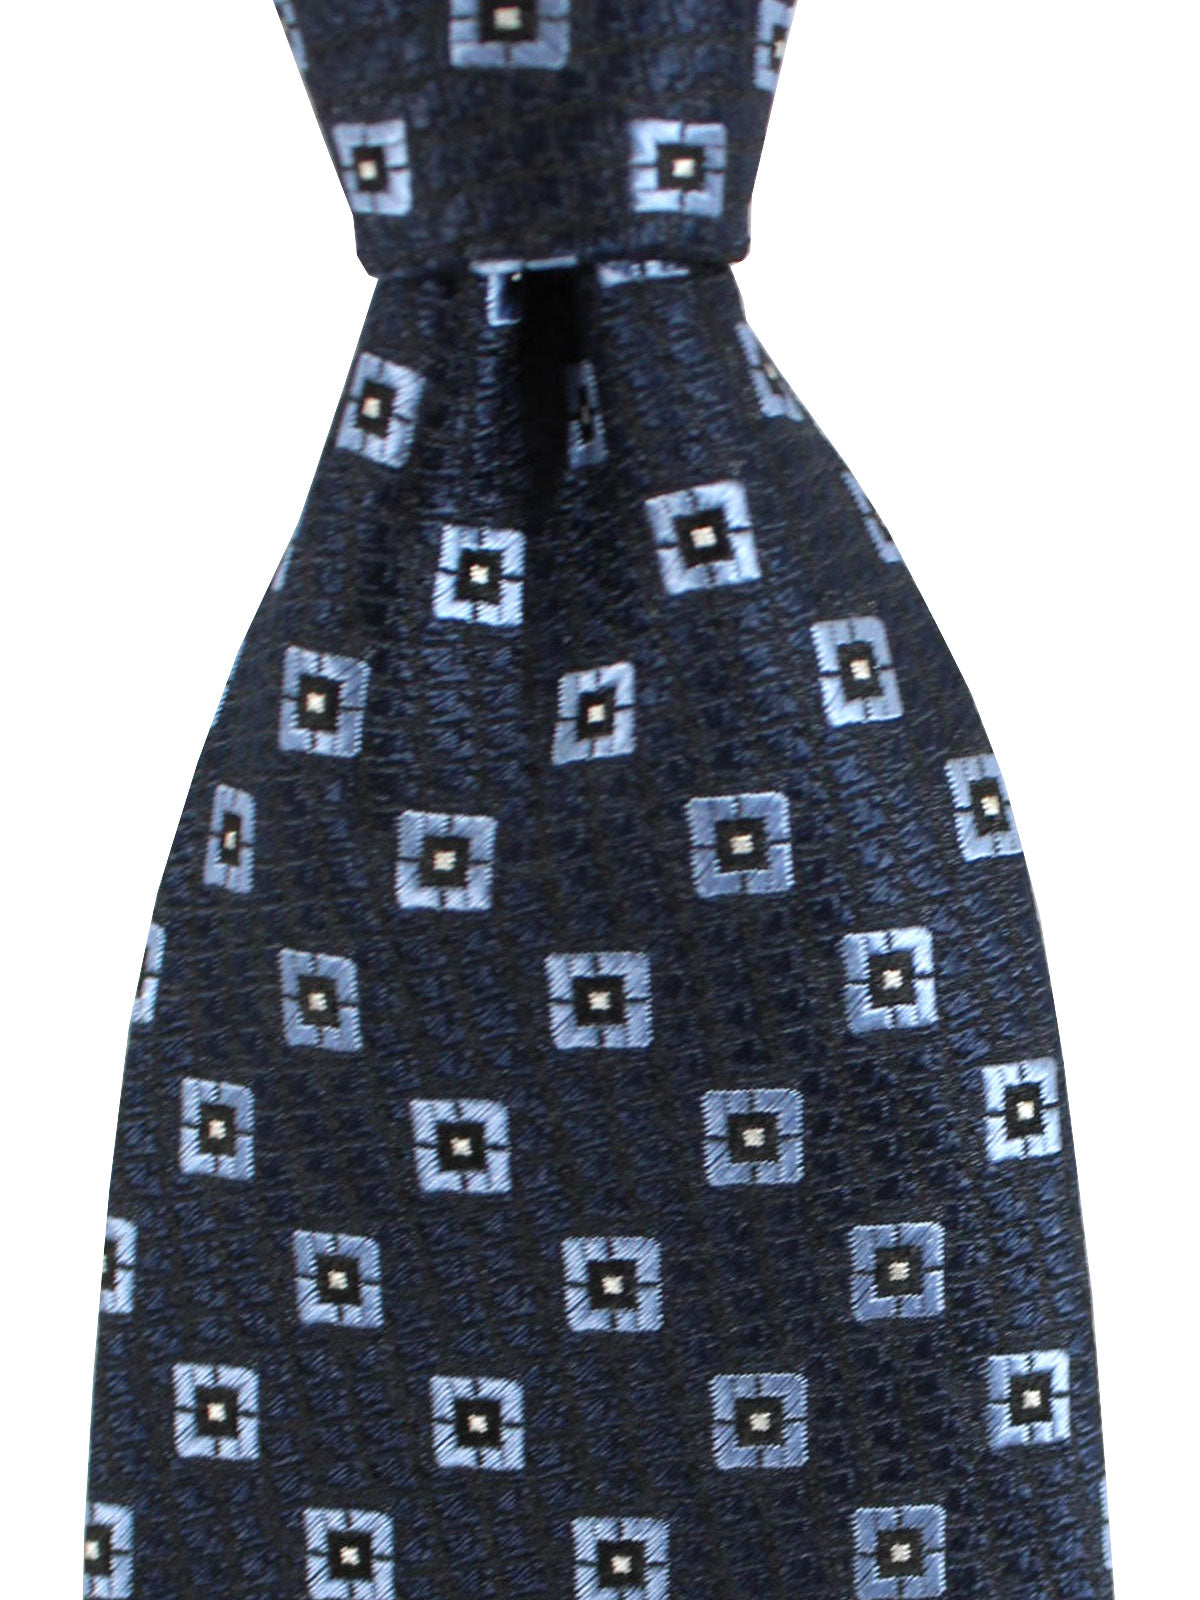 Ermenegildo Zegna Silk Necktie Navy Blue Geometric